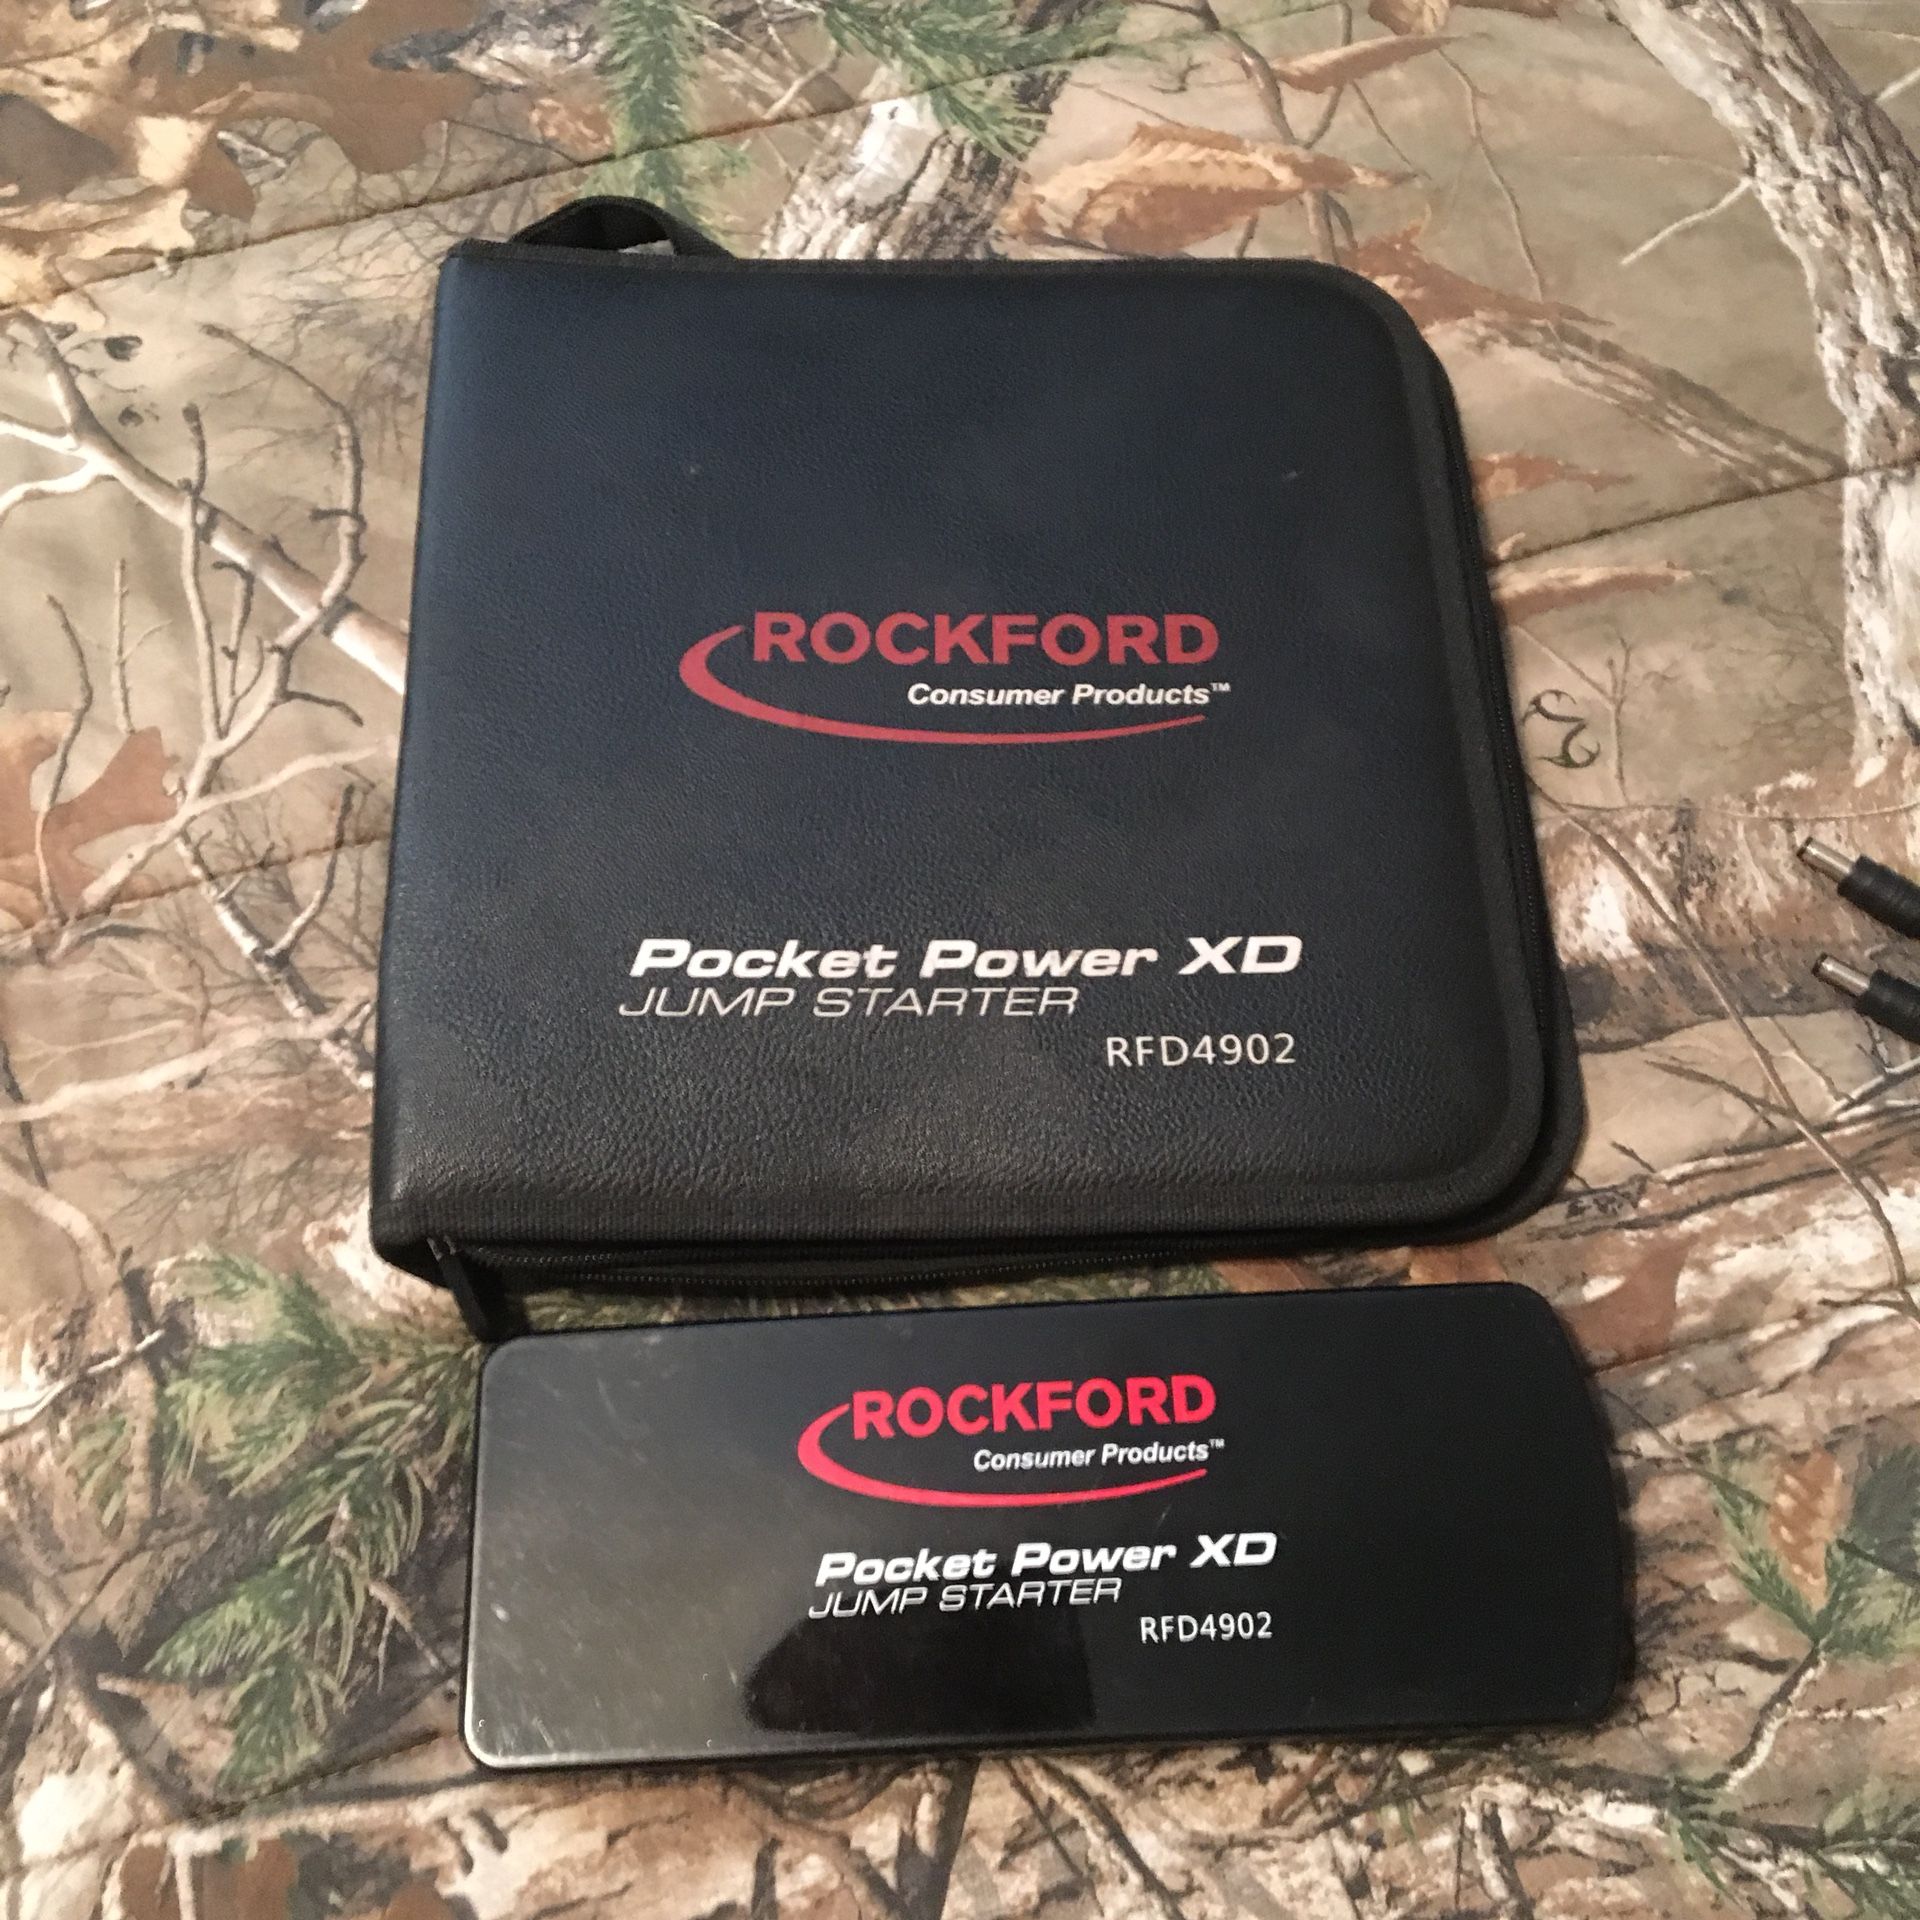 Rockford portable charger